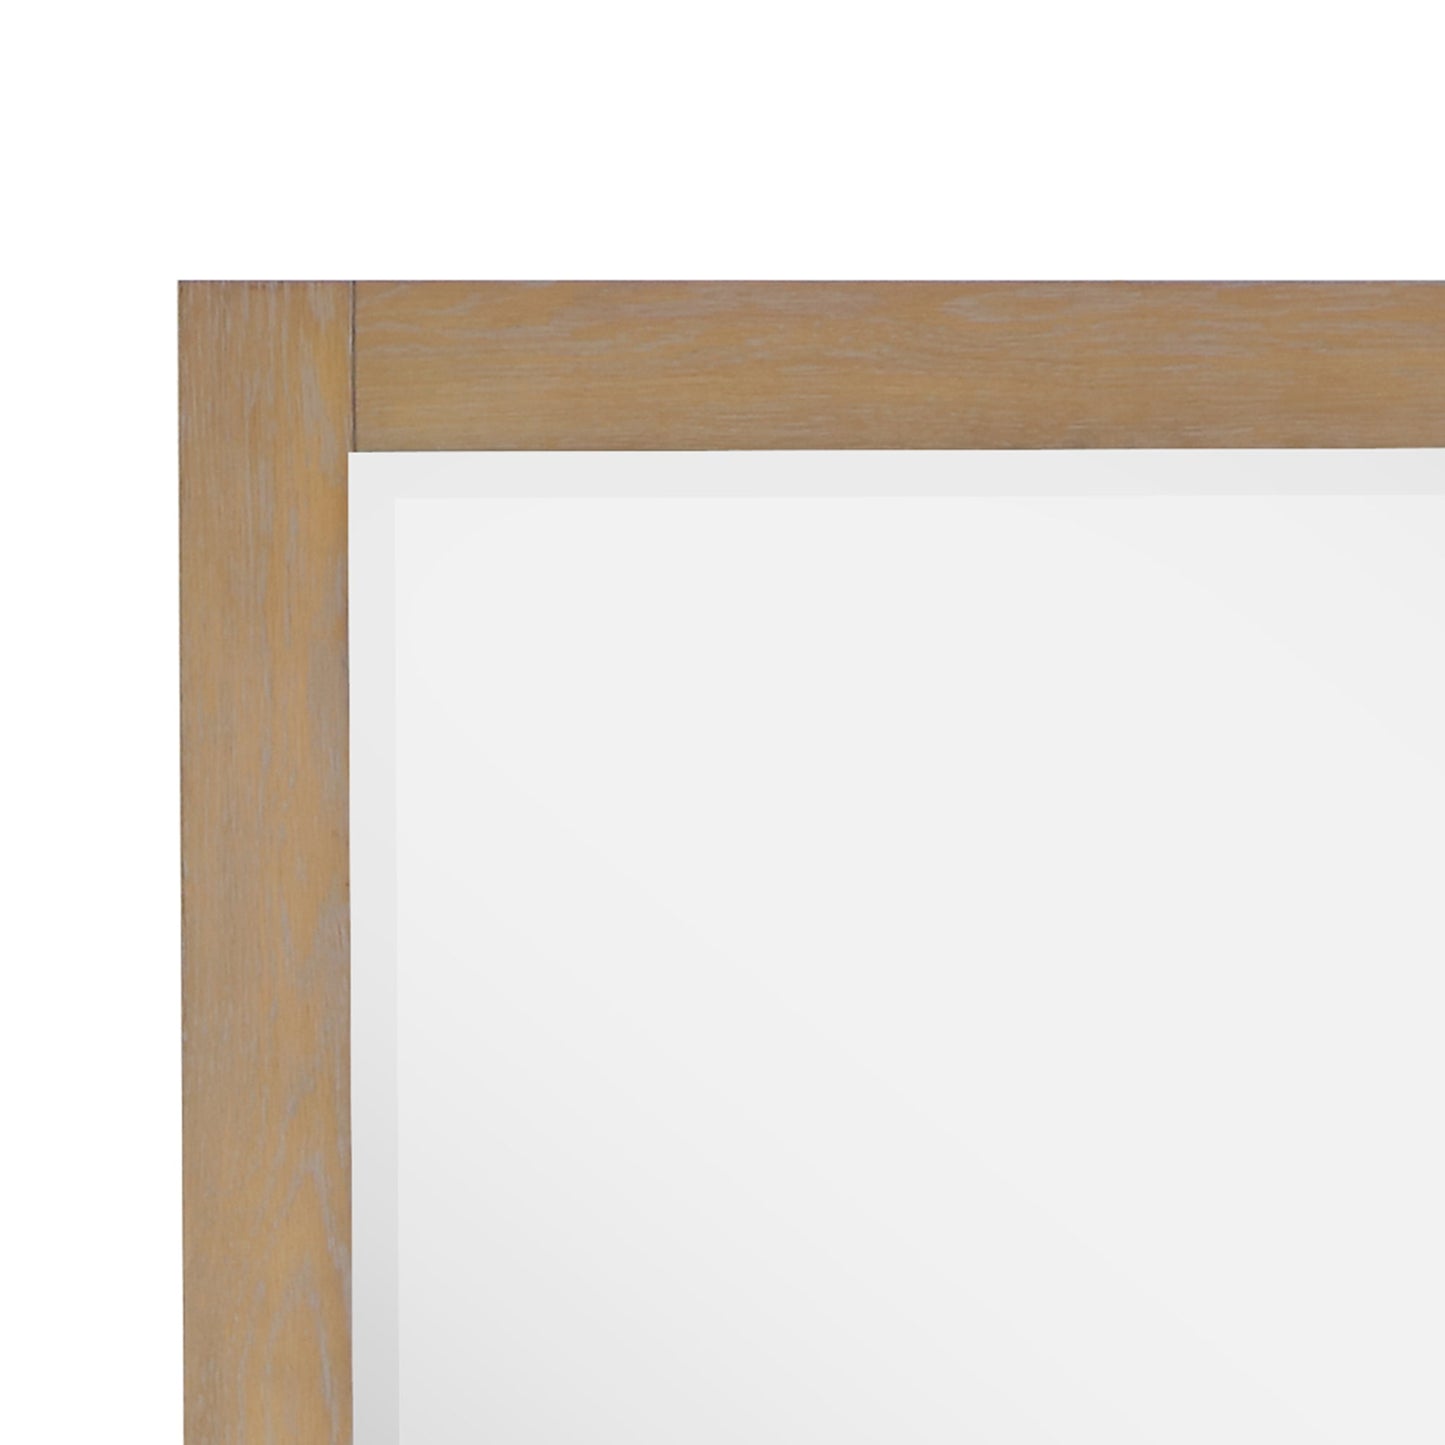 Ivy 48" Rectangular Bathroom Wood Framed Wall Mirror in Washed Oak